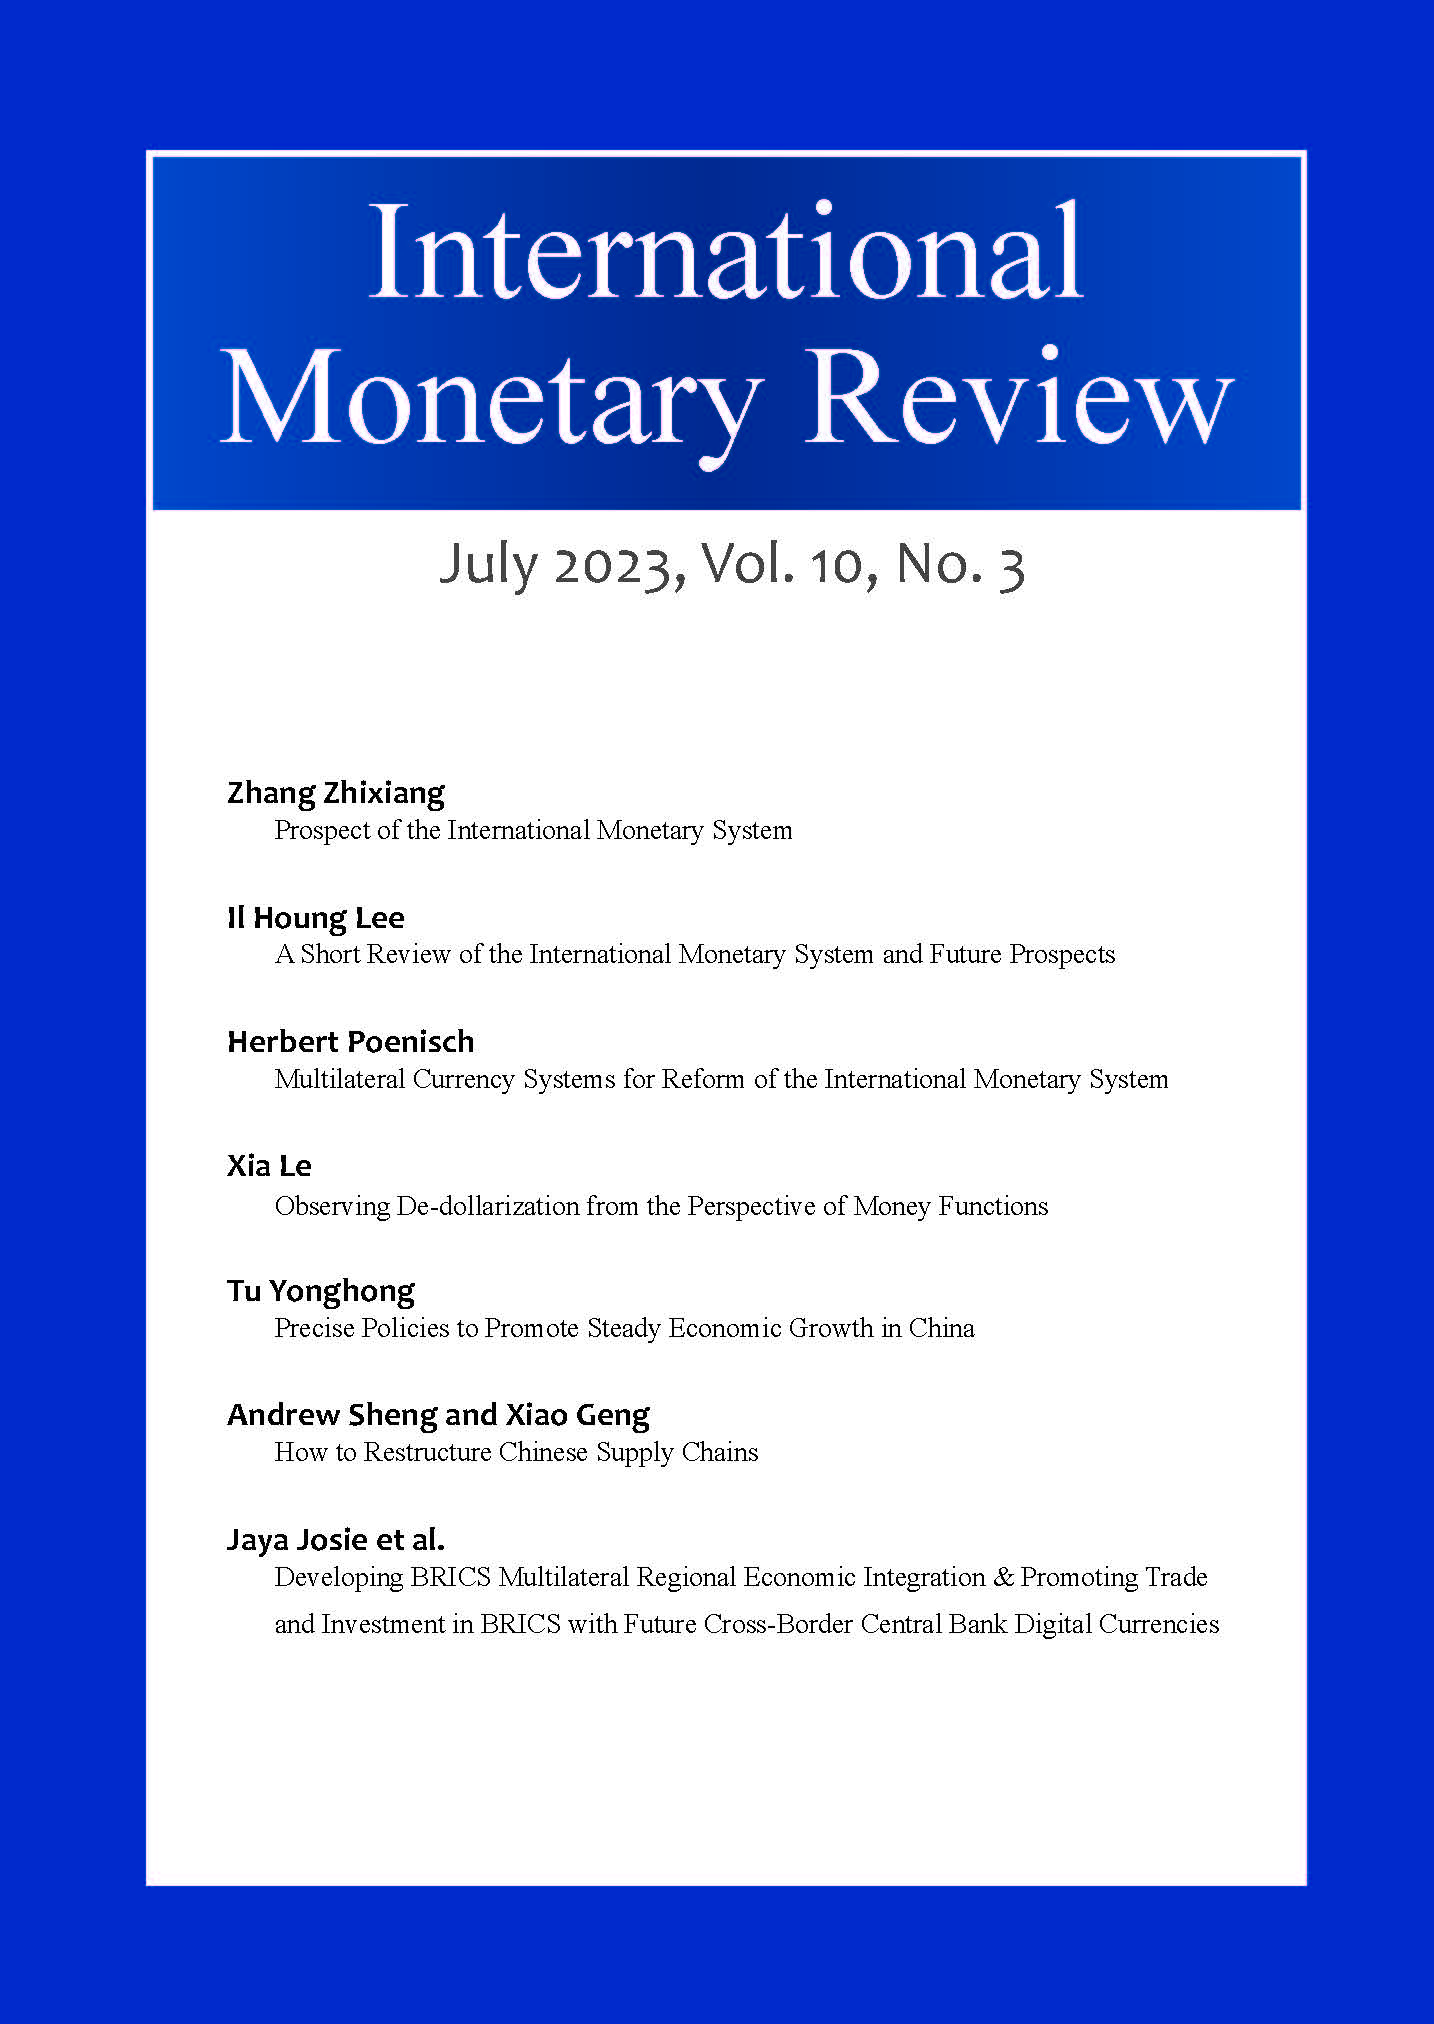 International Monetary Review, July 2023, Vol. 10 No. 3